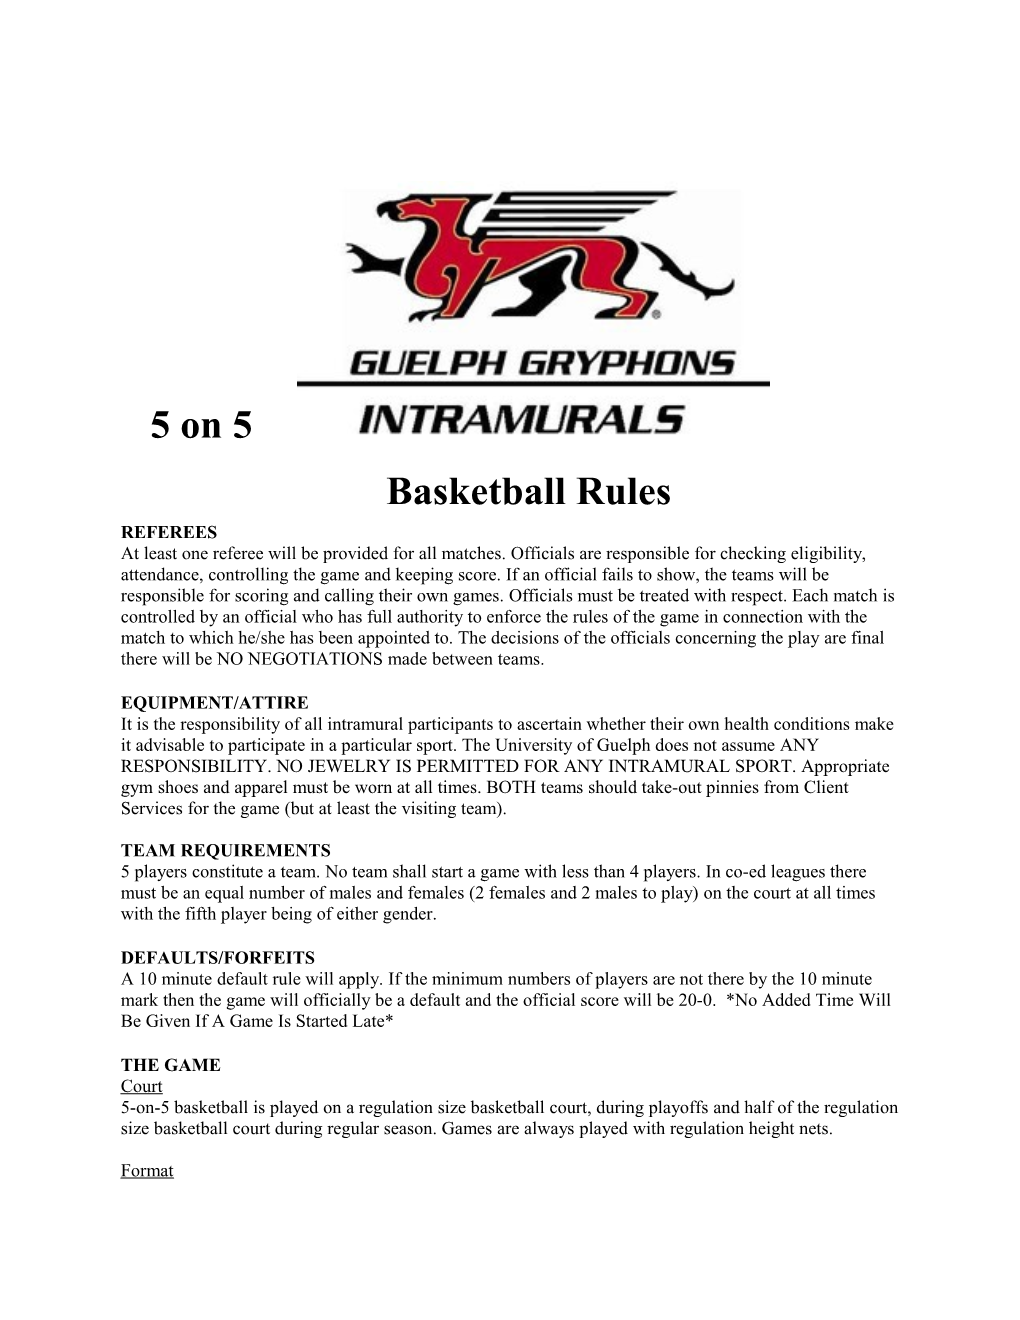 5 on 5 Basketball Rules